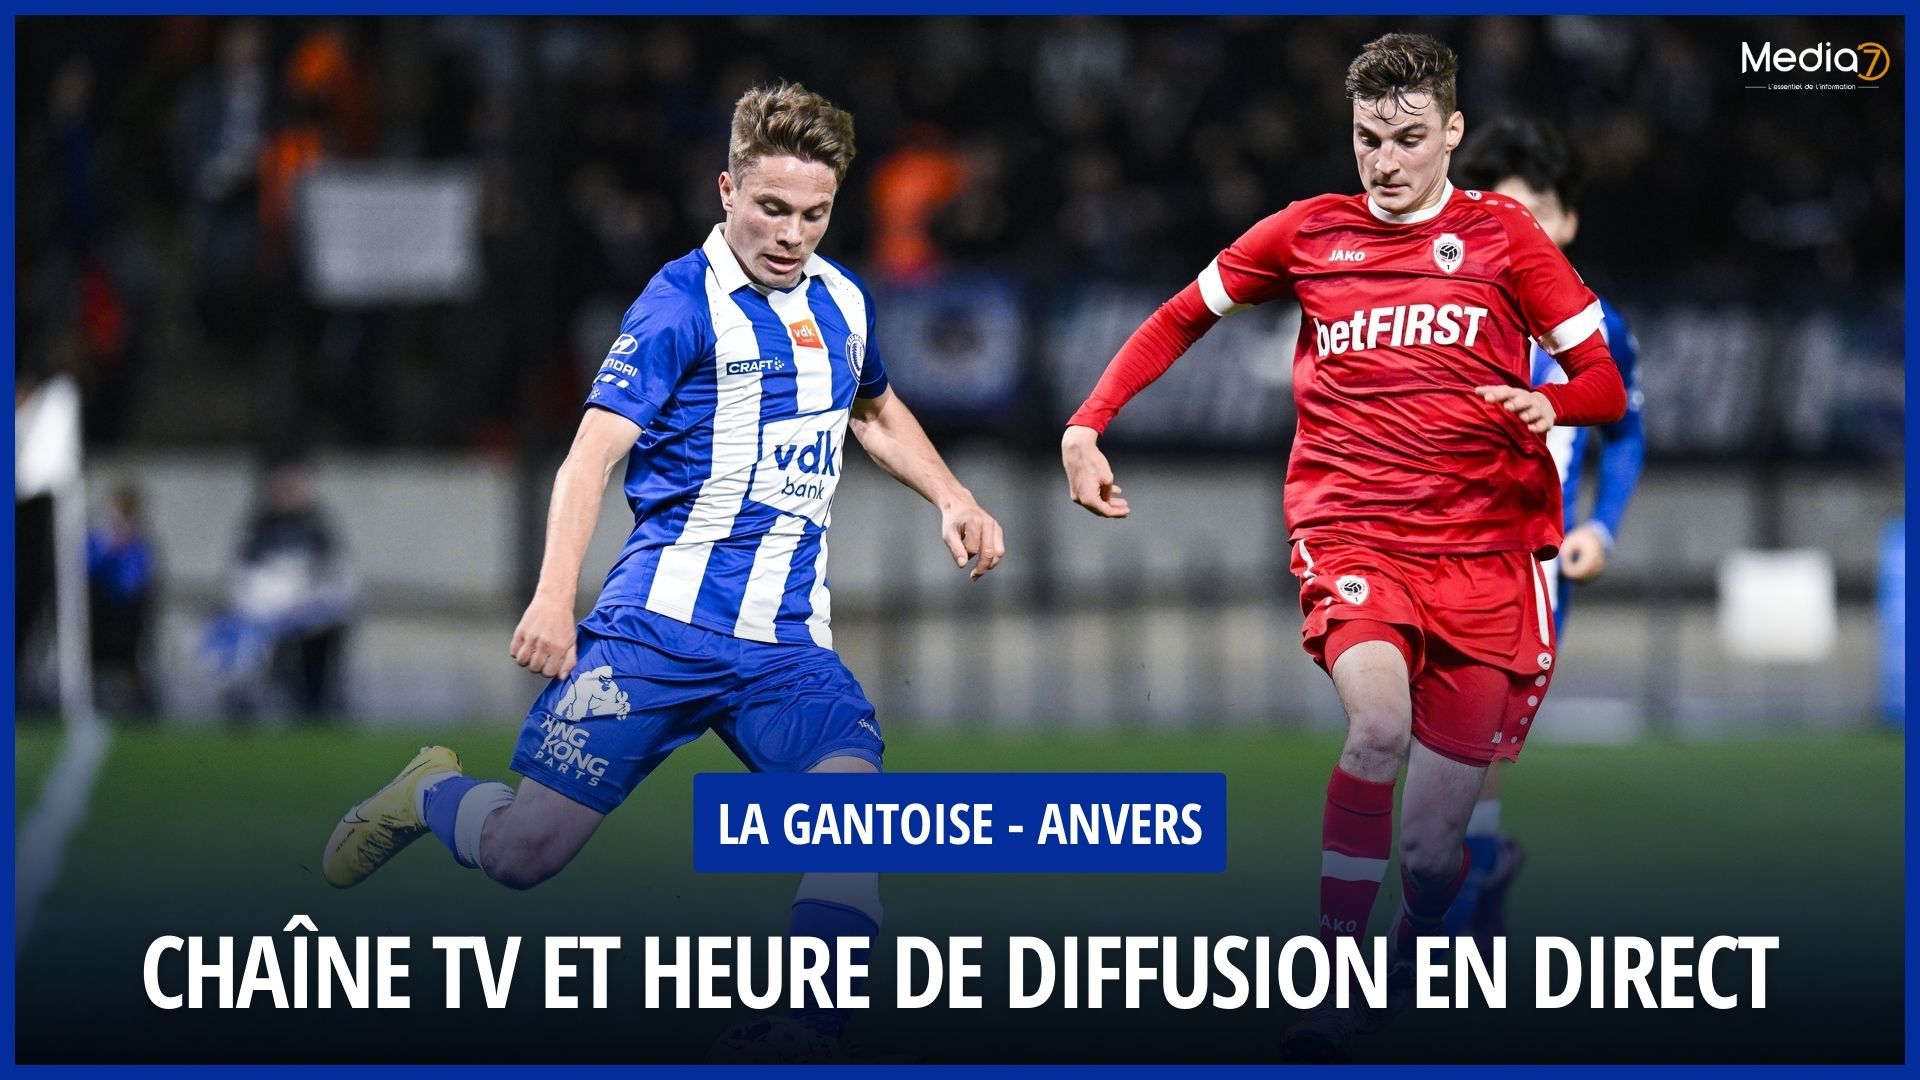 La Gantoise - Antwerp match live: TV channel and broadcast time - Media7